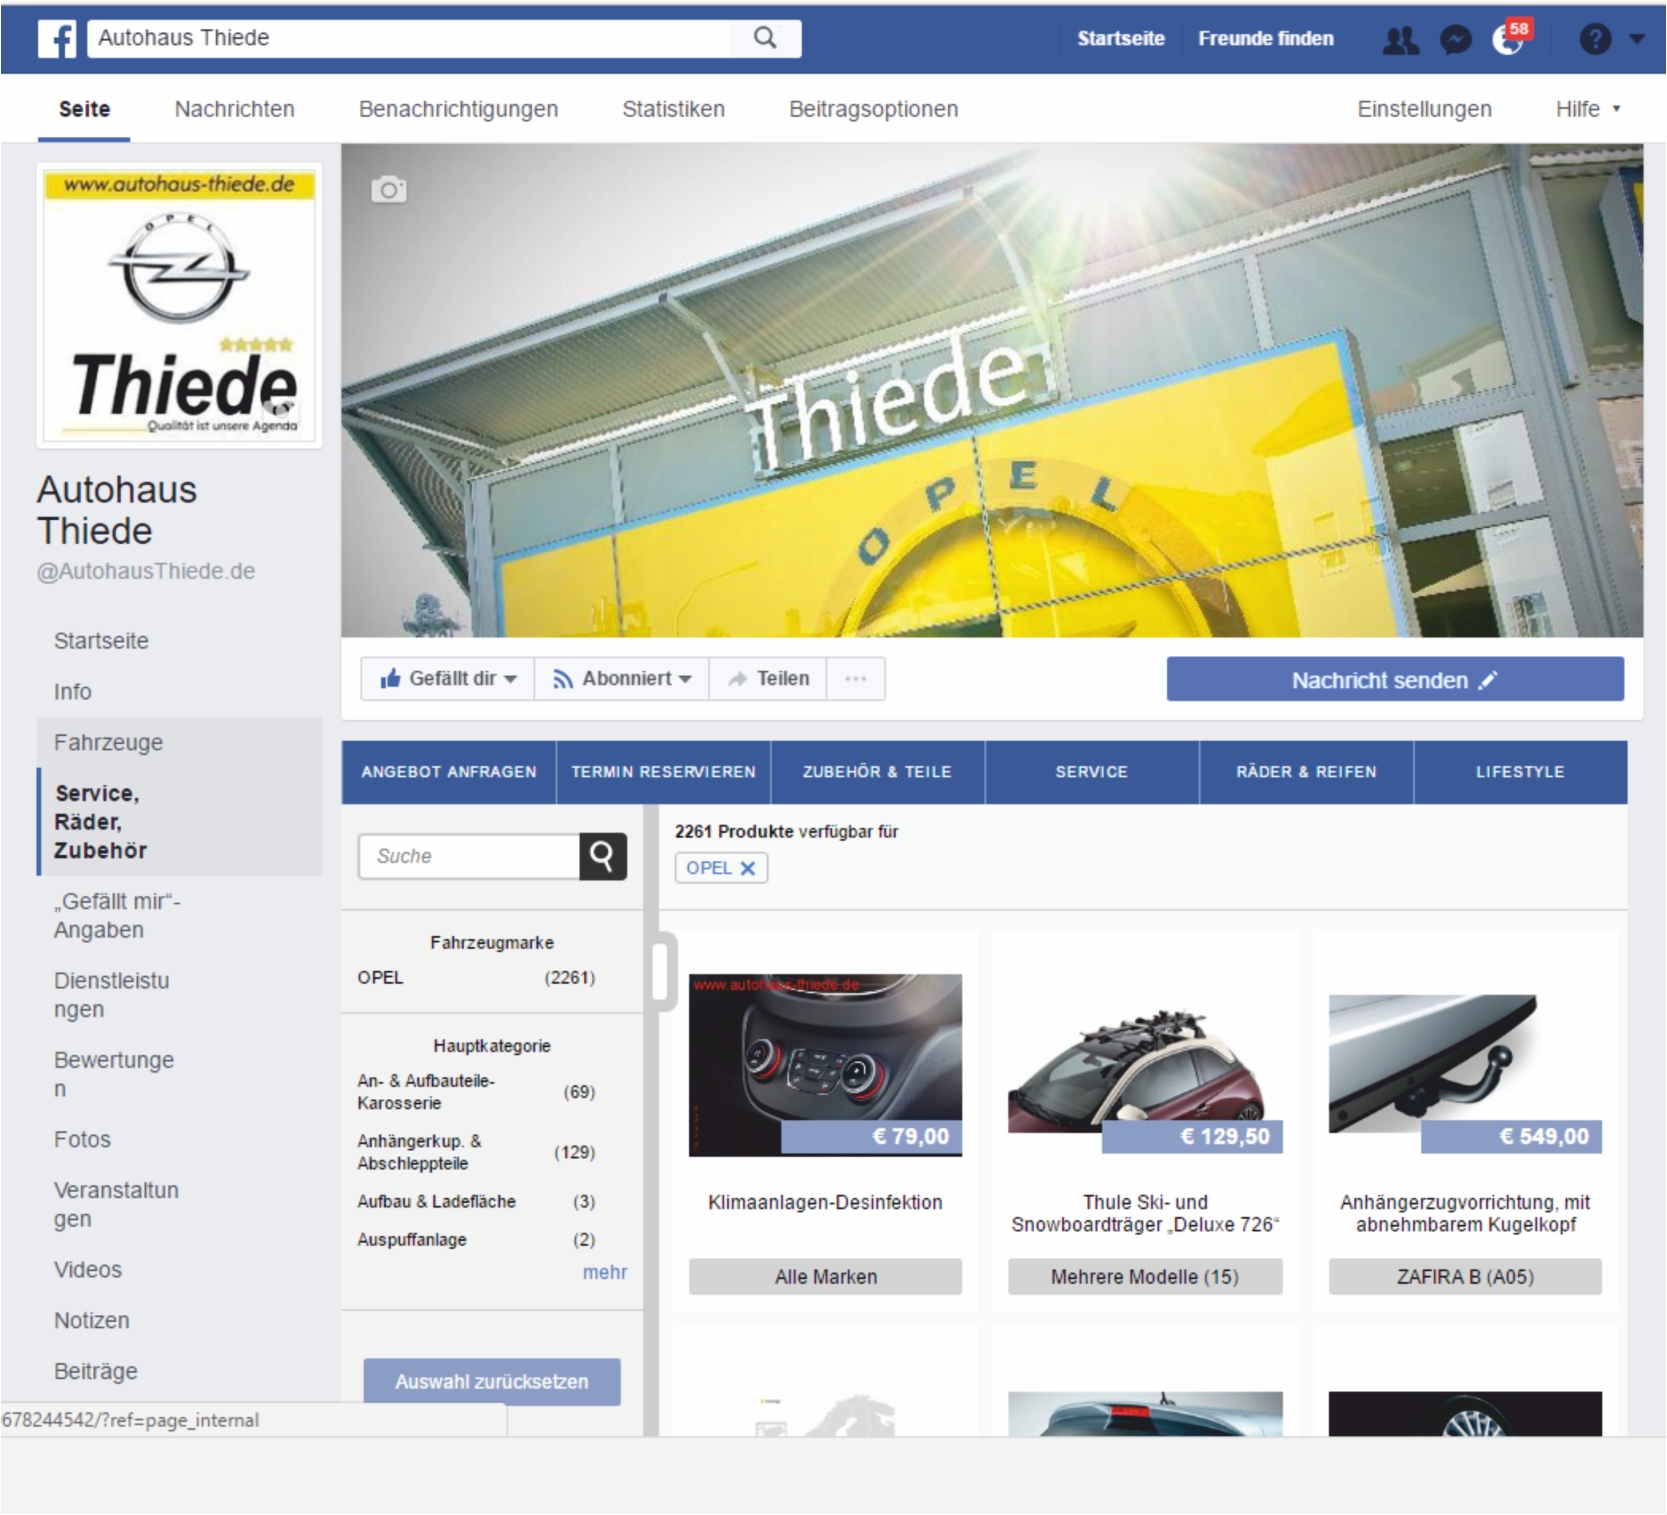 Autohaus Thiede auf Facebook & YouTube